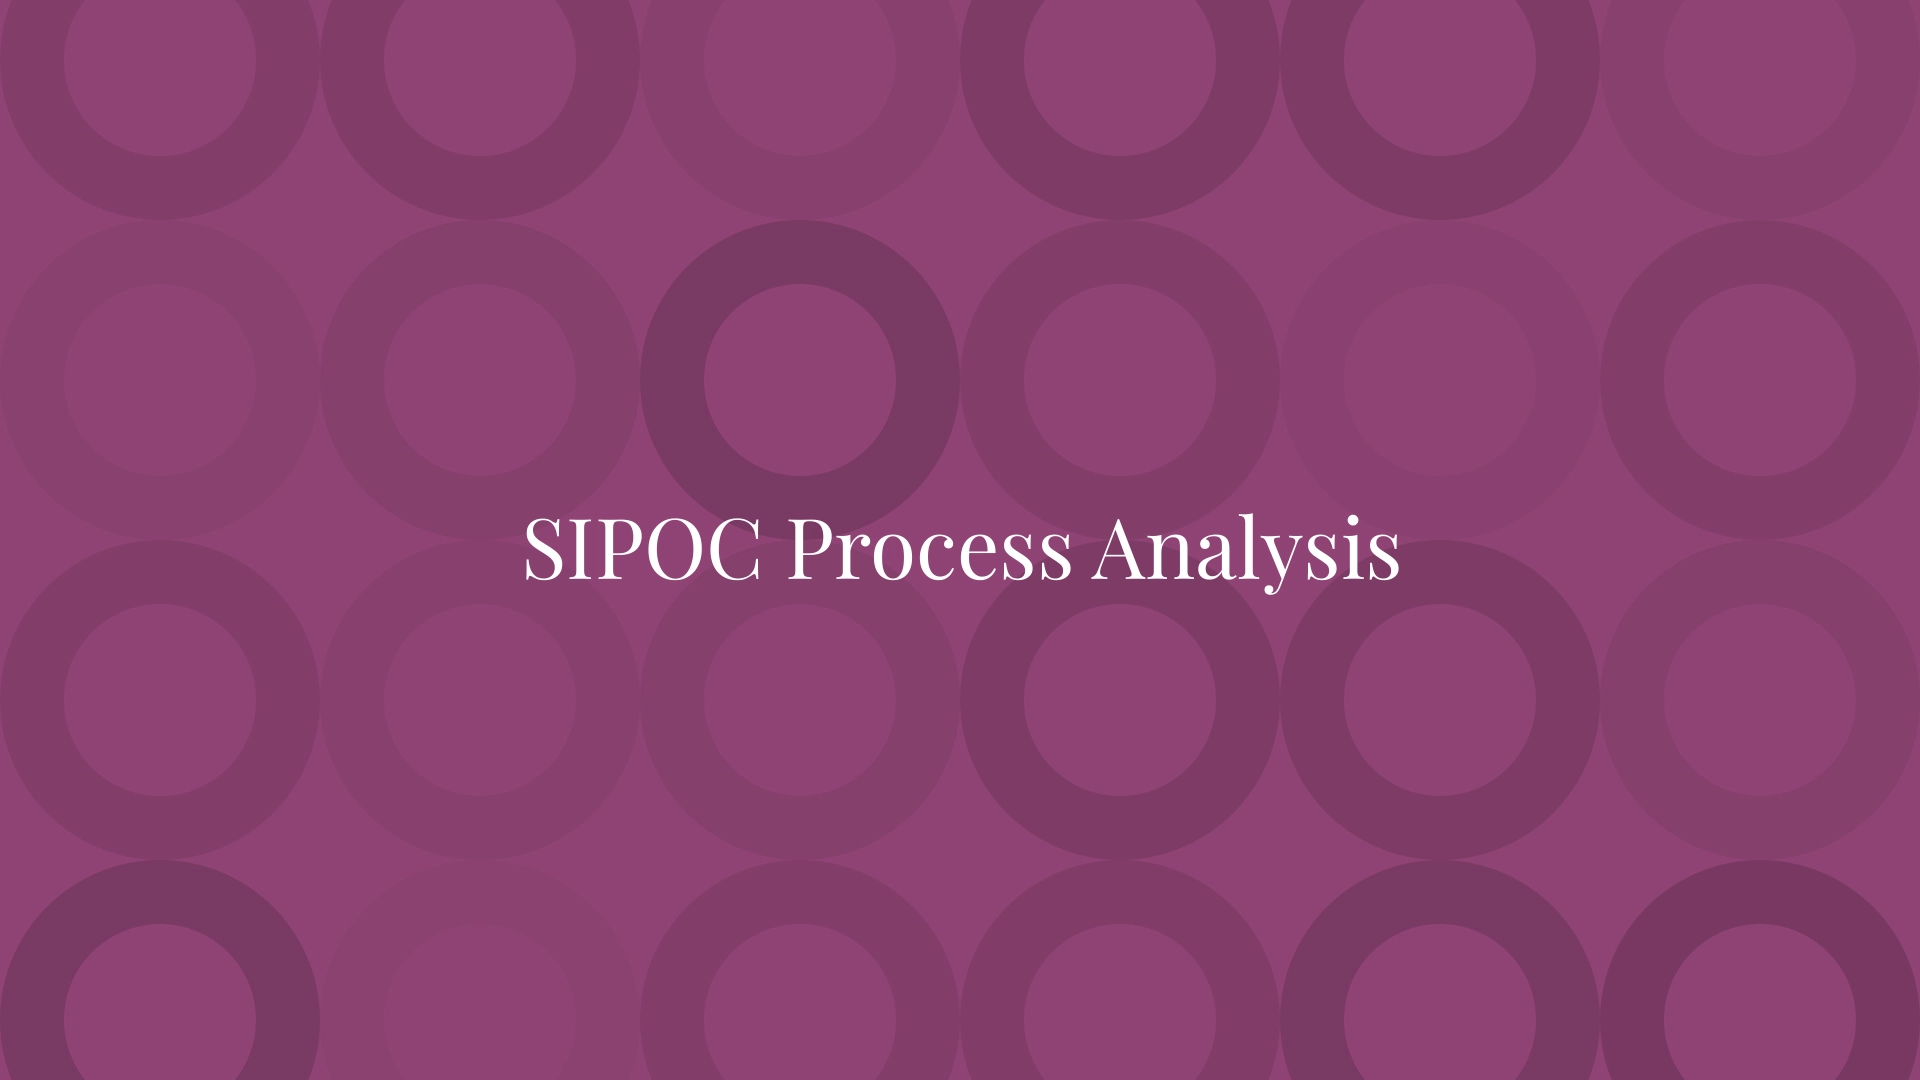 SIPOC Process Analysis